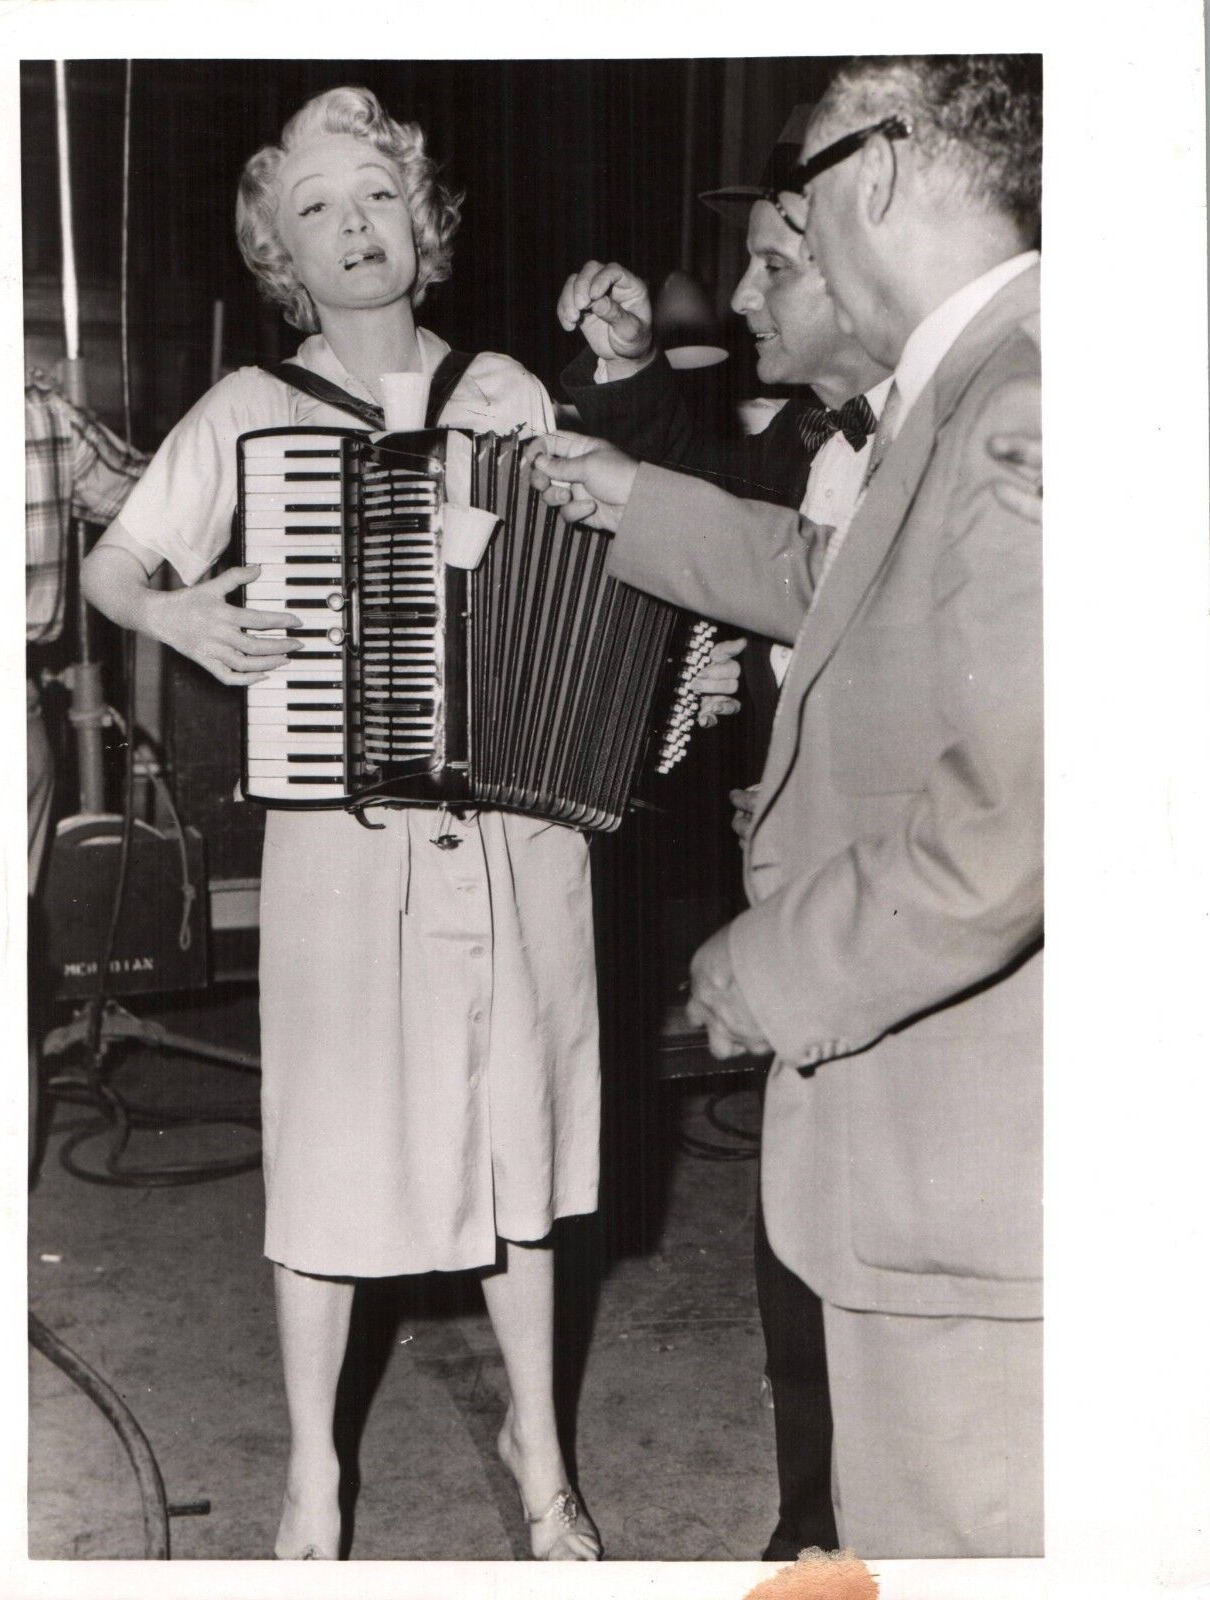 HOLLYWOOD BEAUTY MARLENE DIETRICH STYLISH POSE STUNNING PORTRAIT 1957 Photo C35